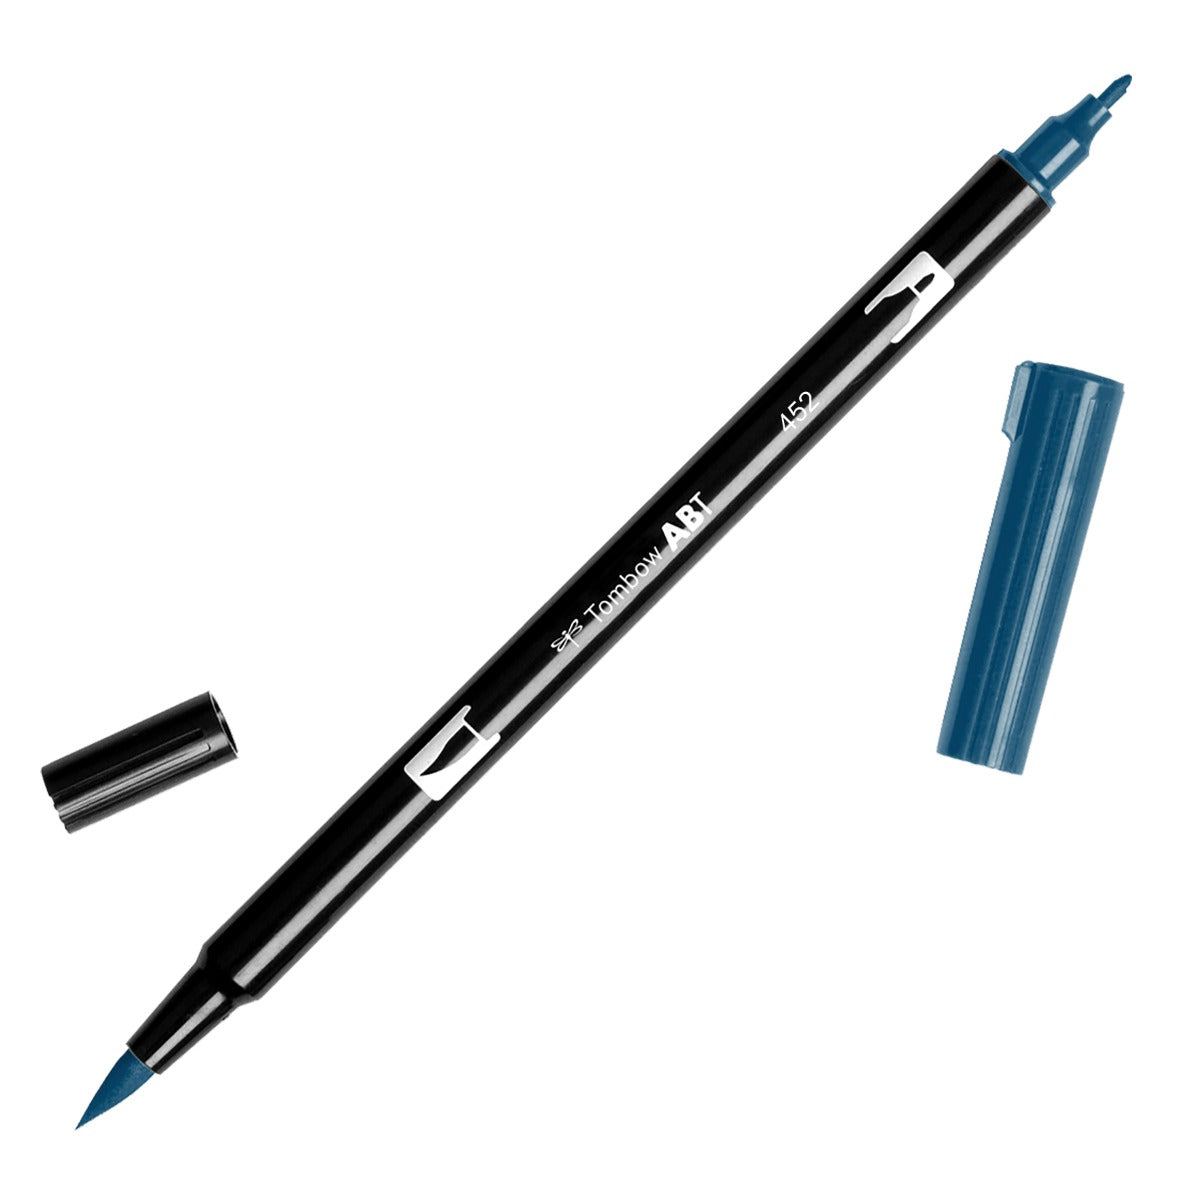 Tombow Dual Brush Pen 452 Process Blue